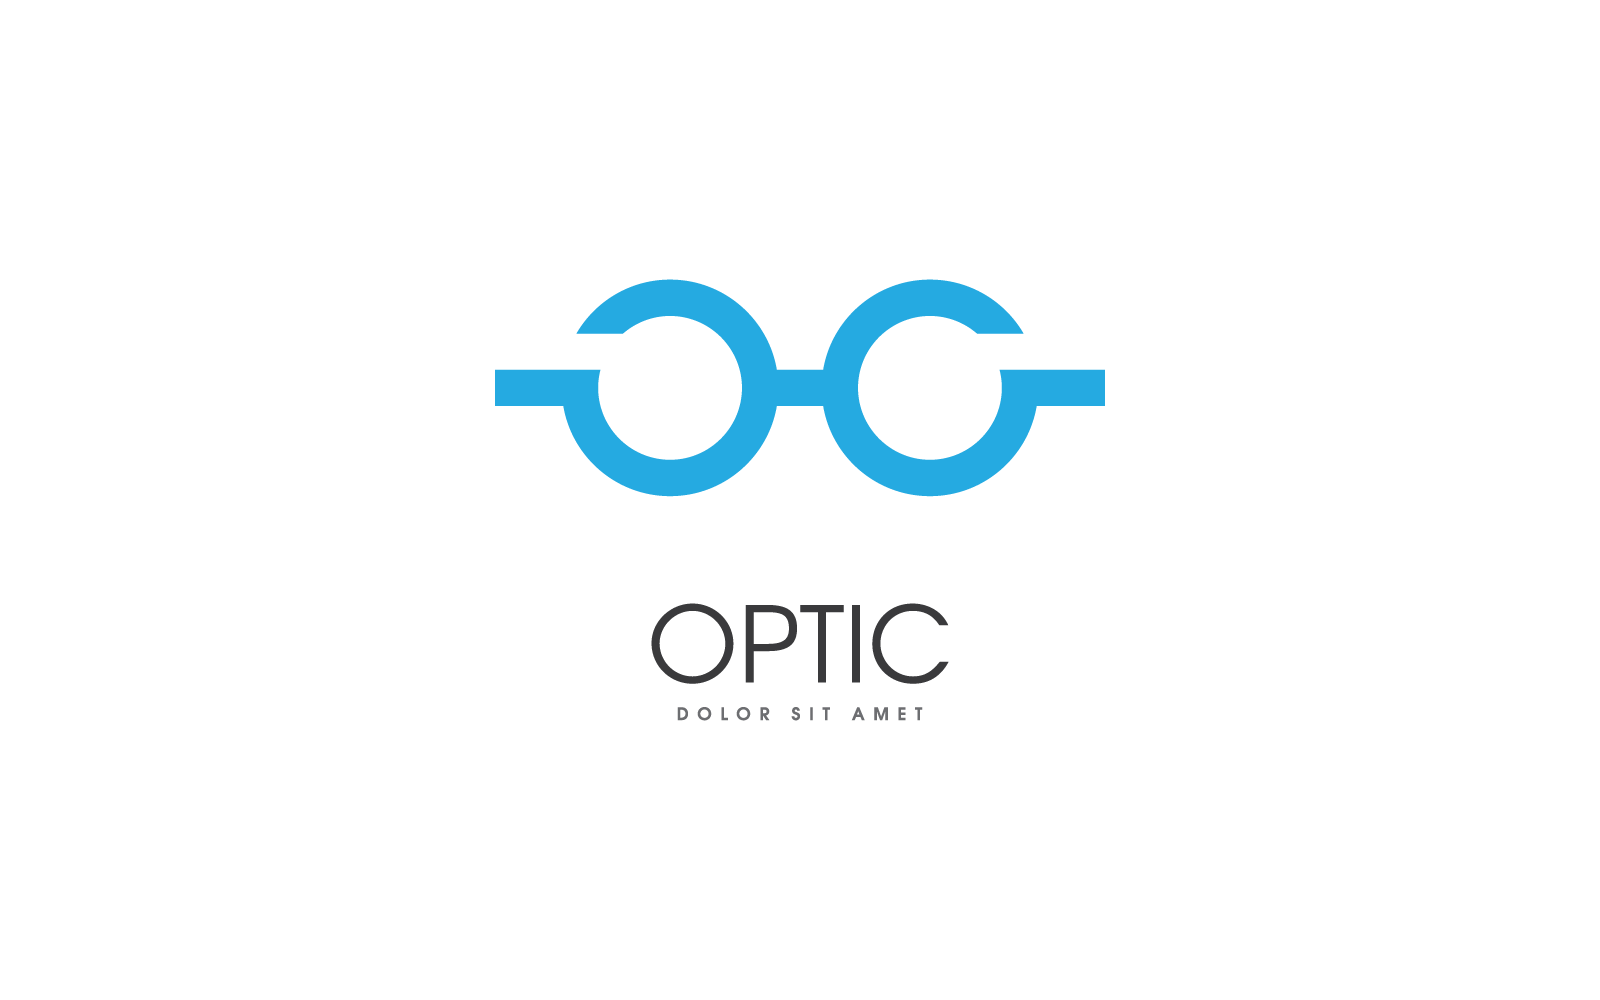 Optisches Logo, Vektorgrafik, flaches Design